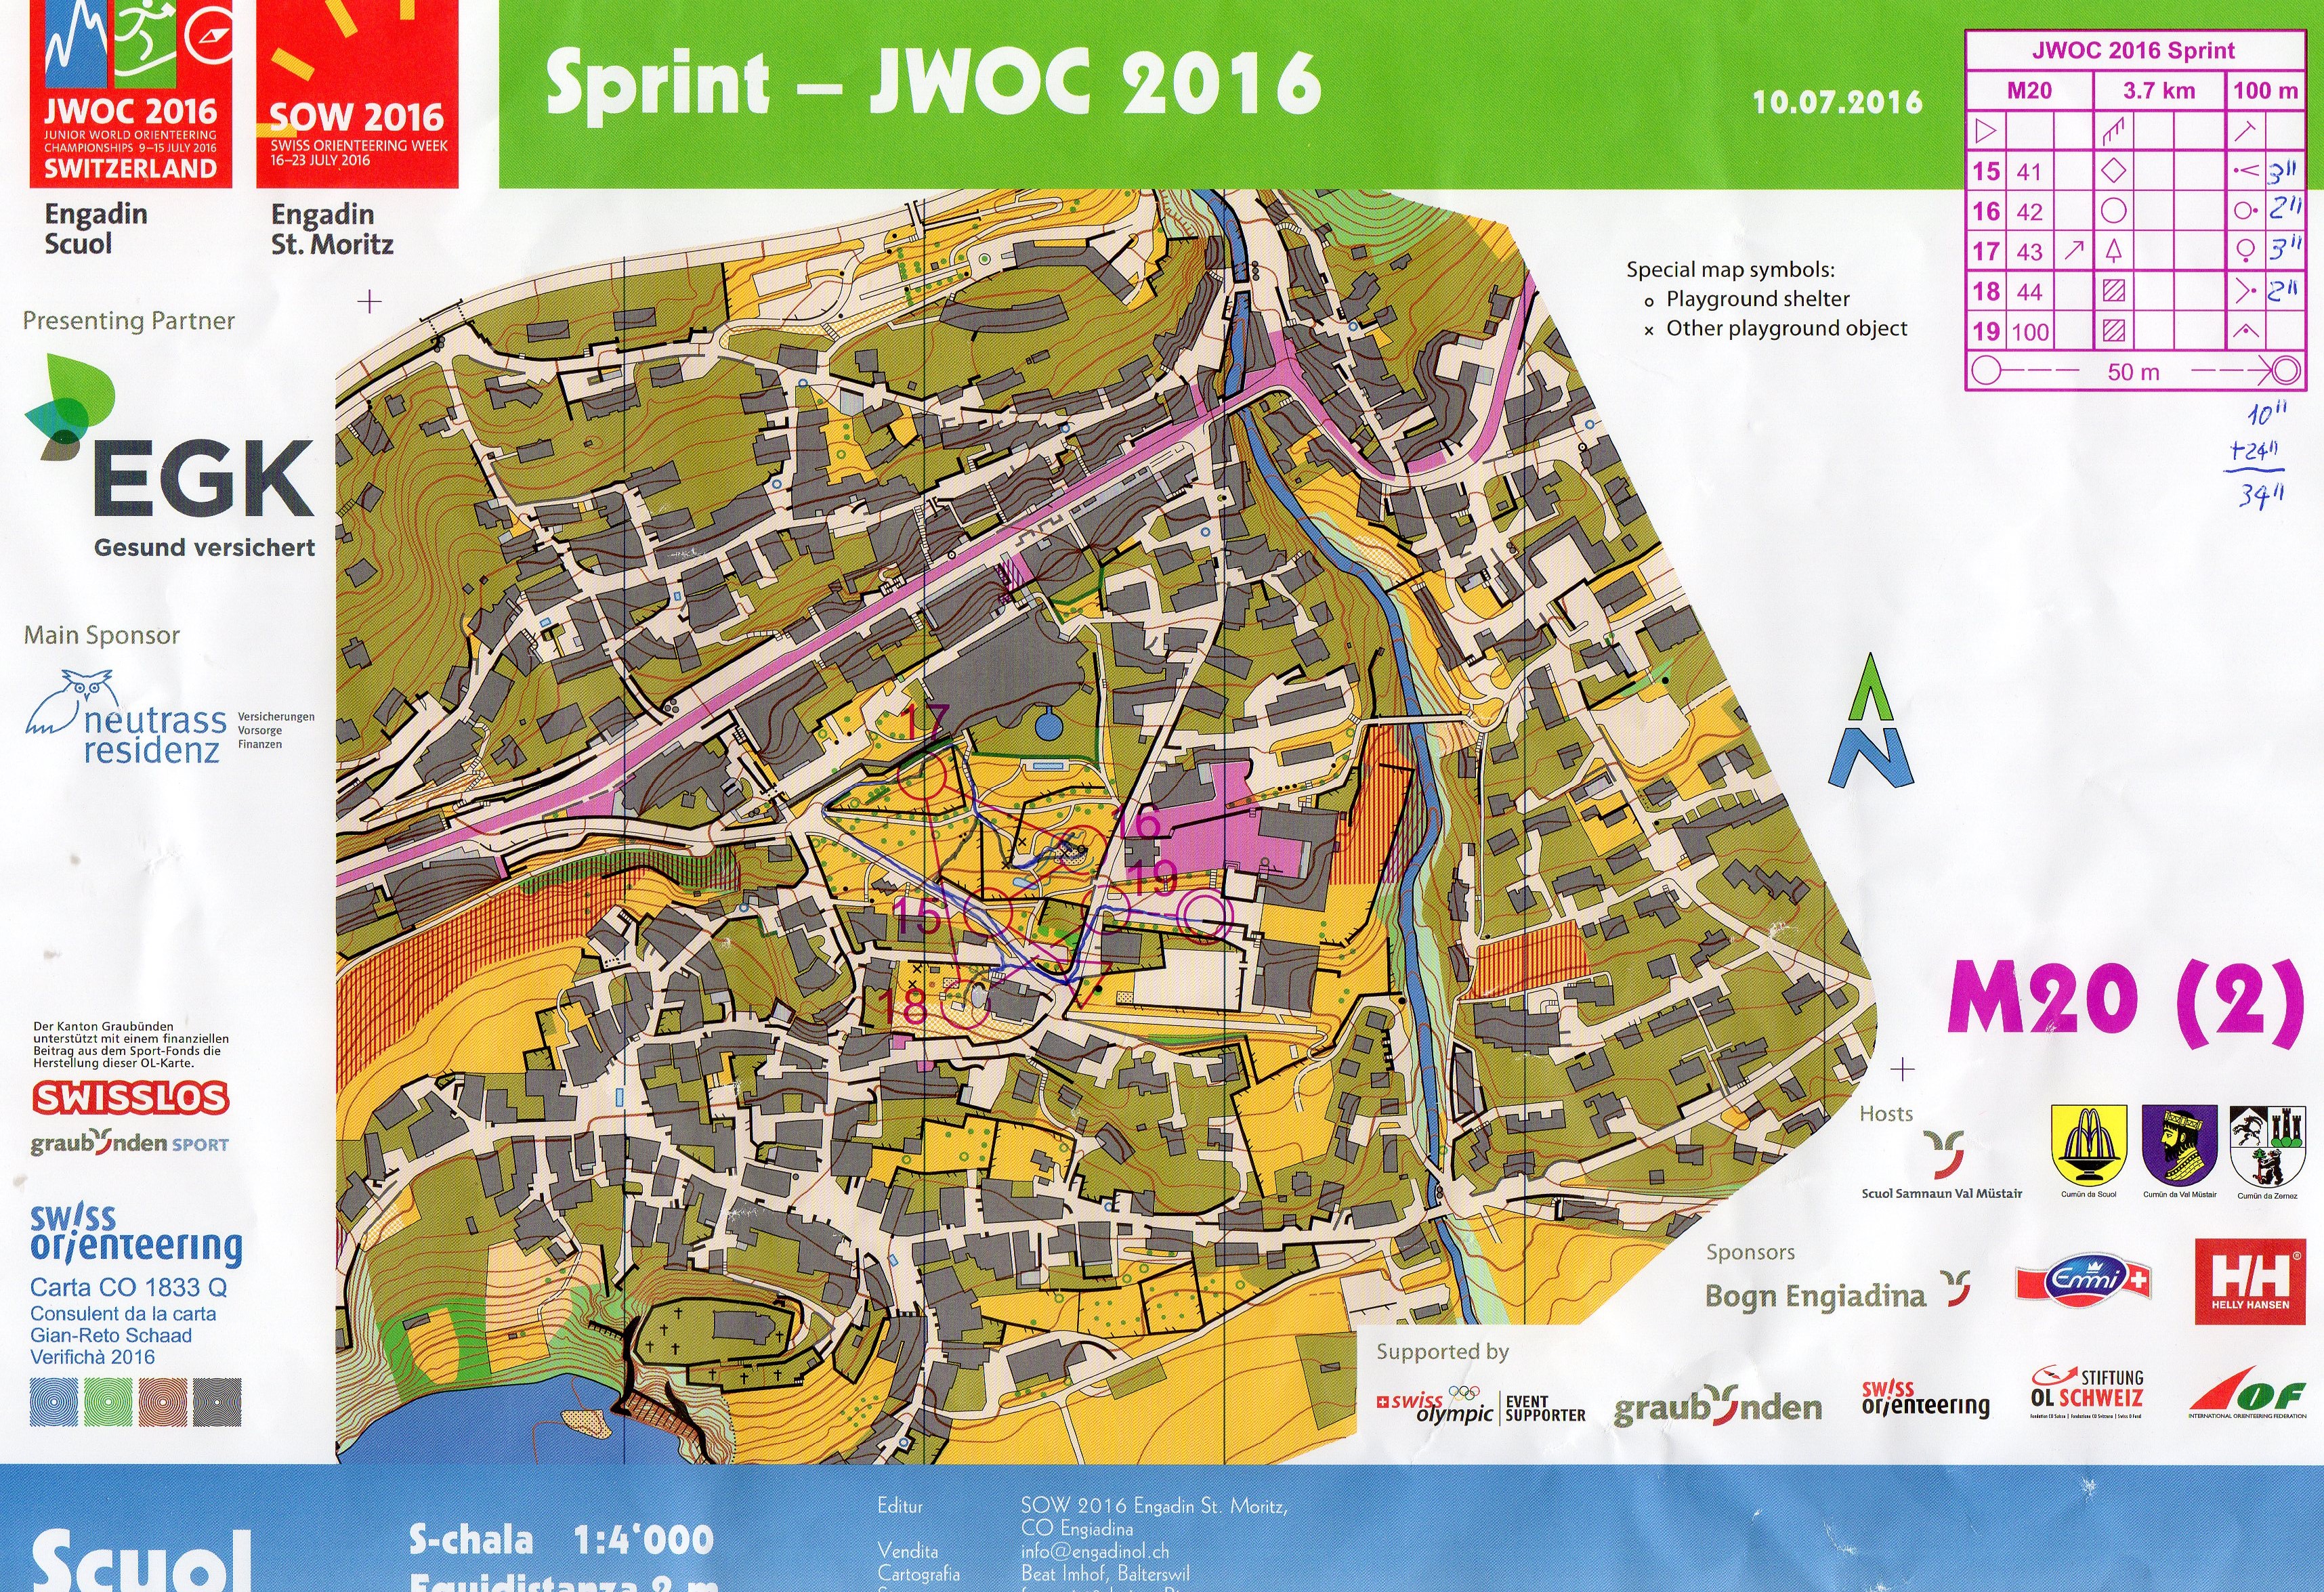 JWOC Sprint part 2 (2016-07-10)